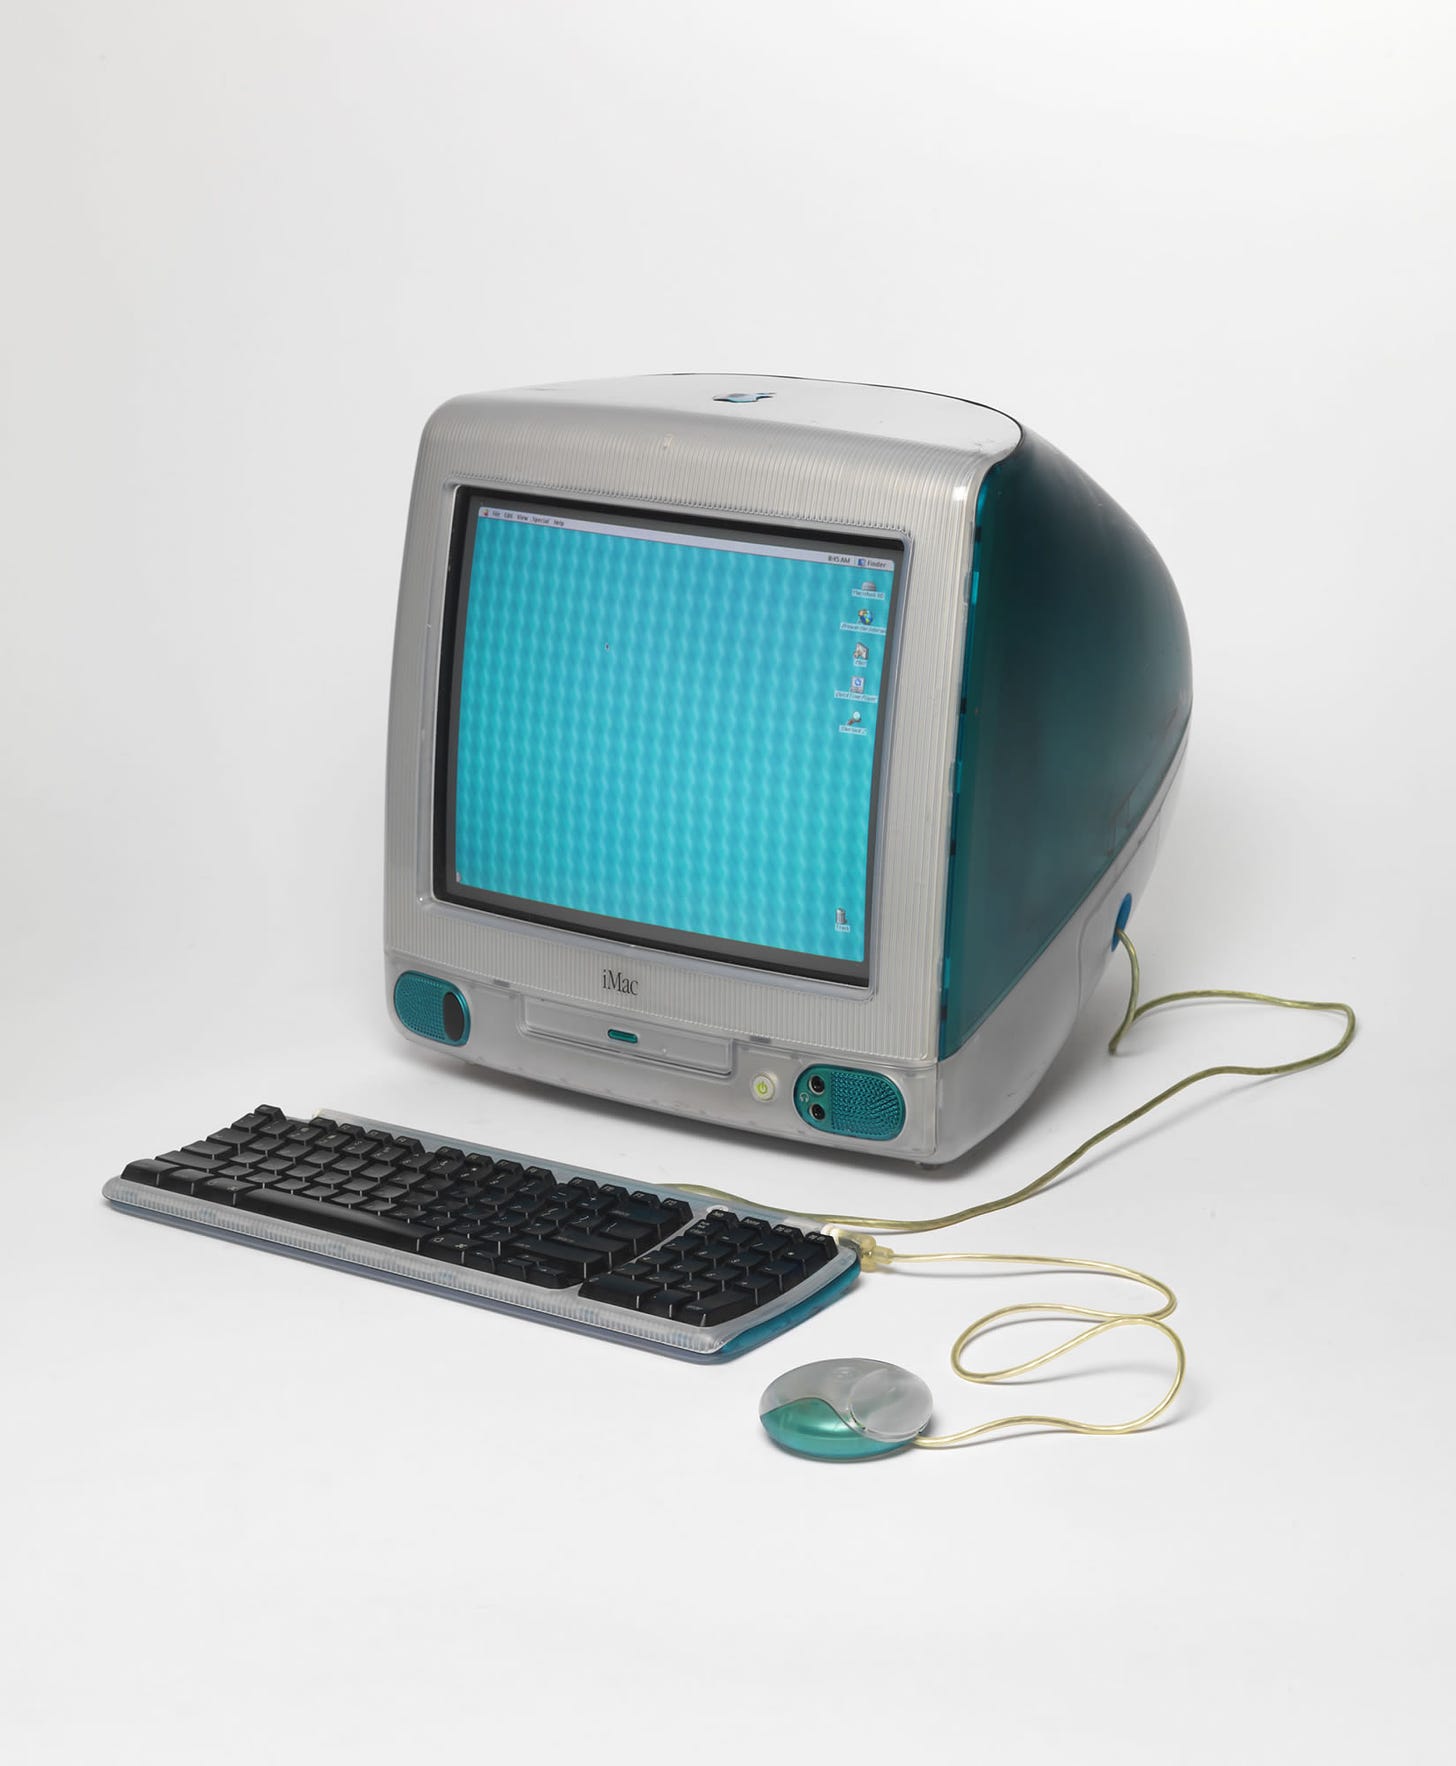 Apple iMac G3 - The Interface Experience: Bard Graduate Center